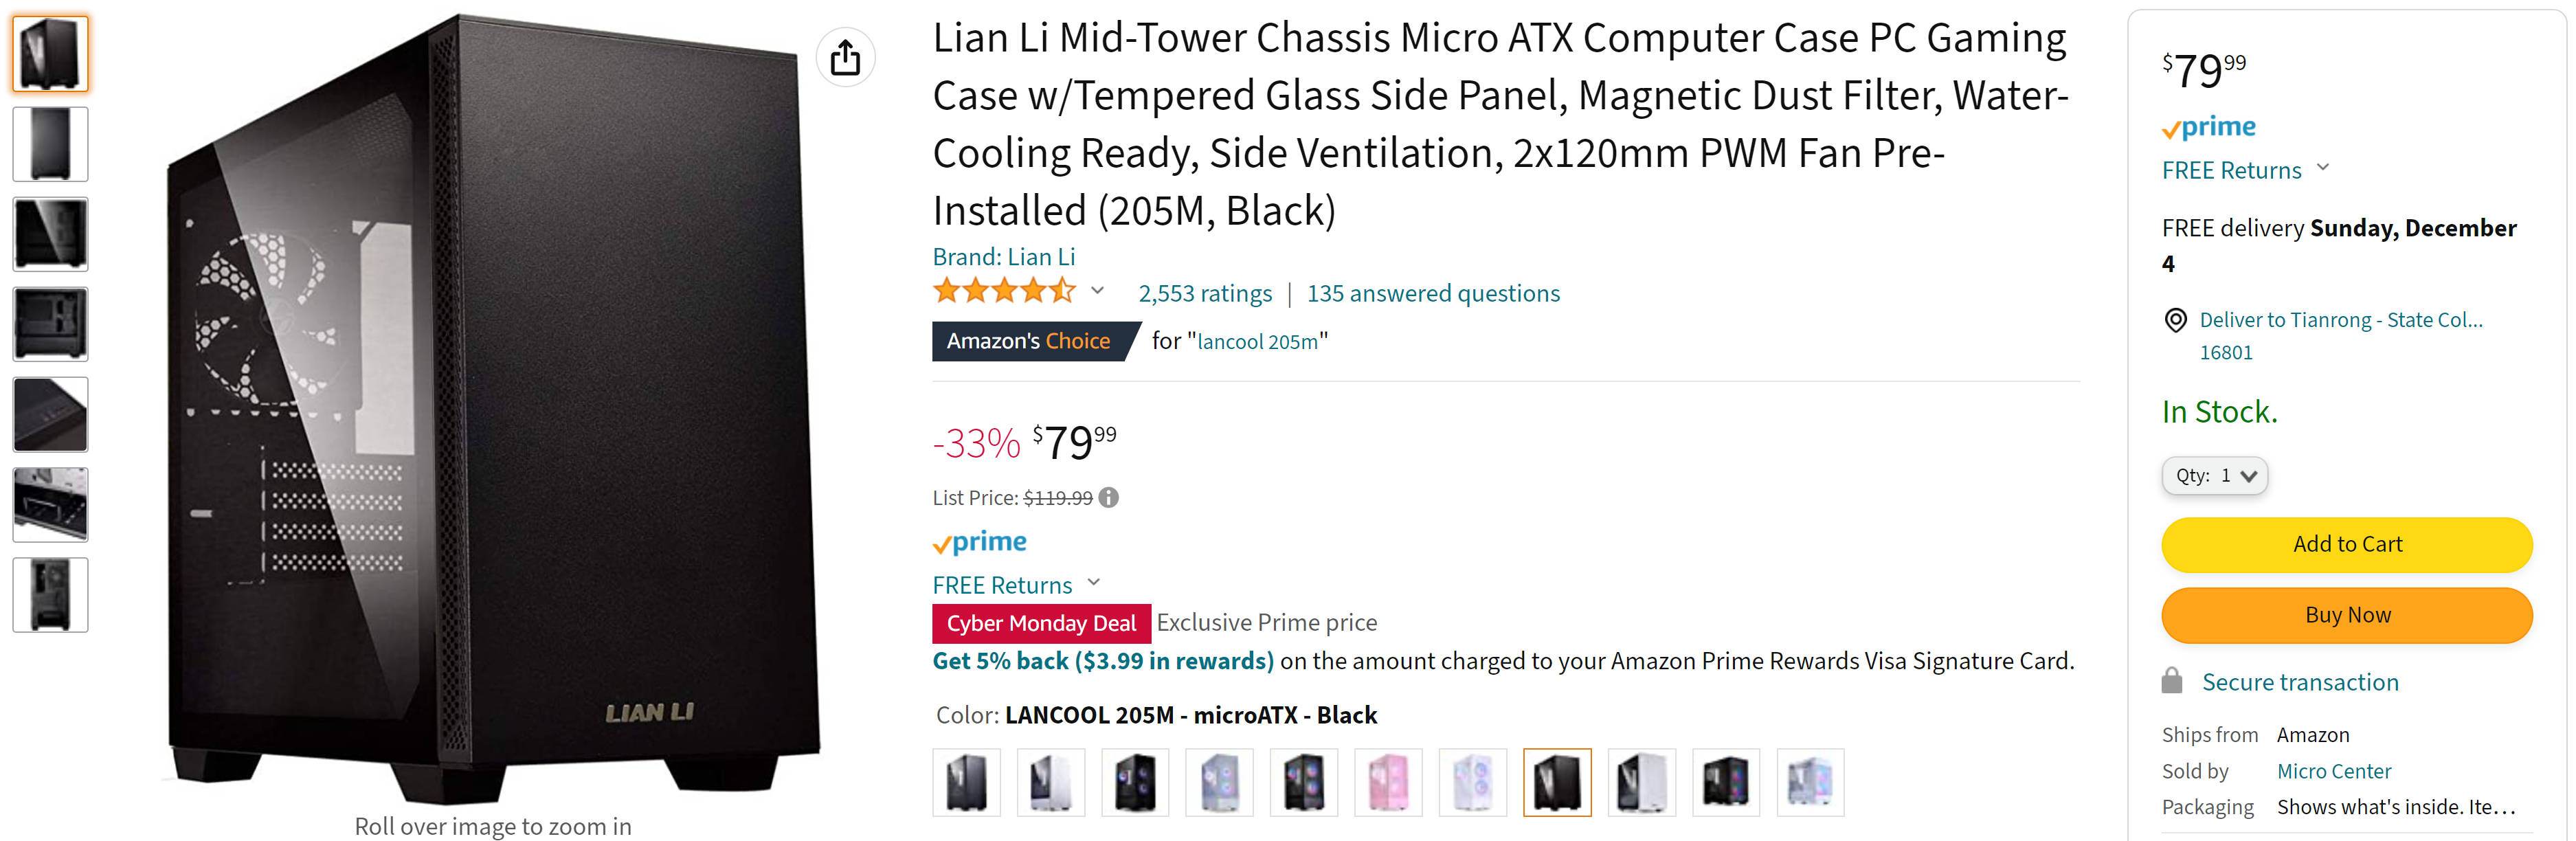 联立 Lancool 205M Mid-Tower Micro ATX Computer Case